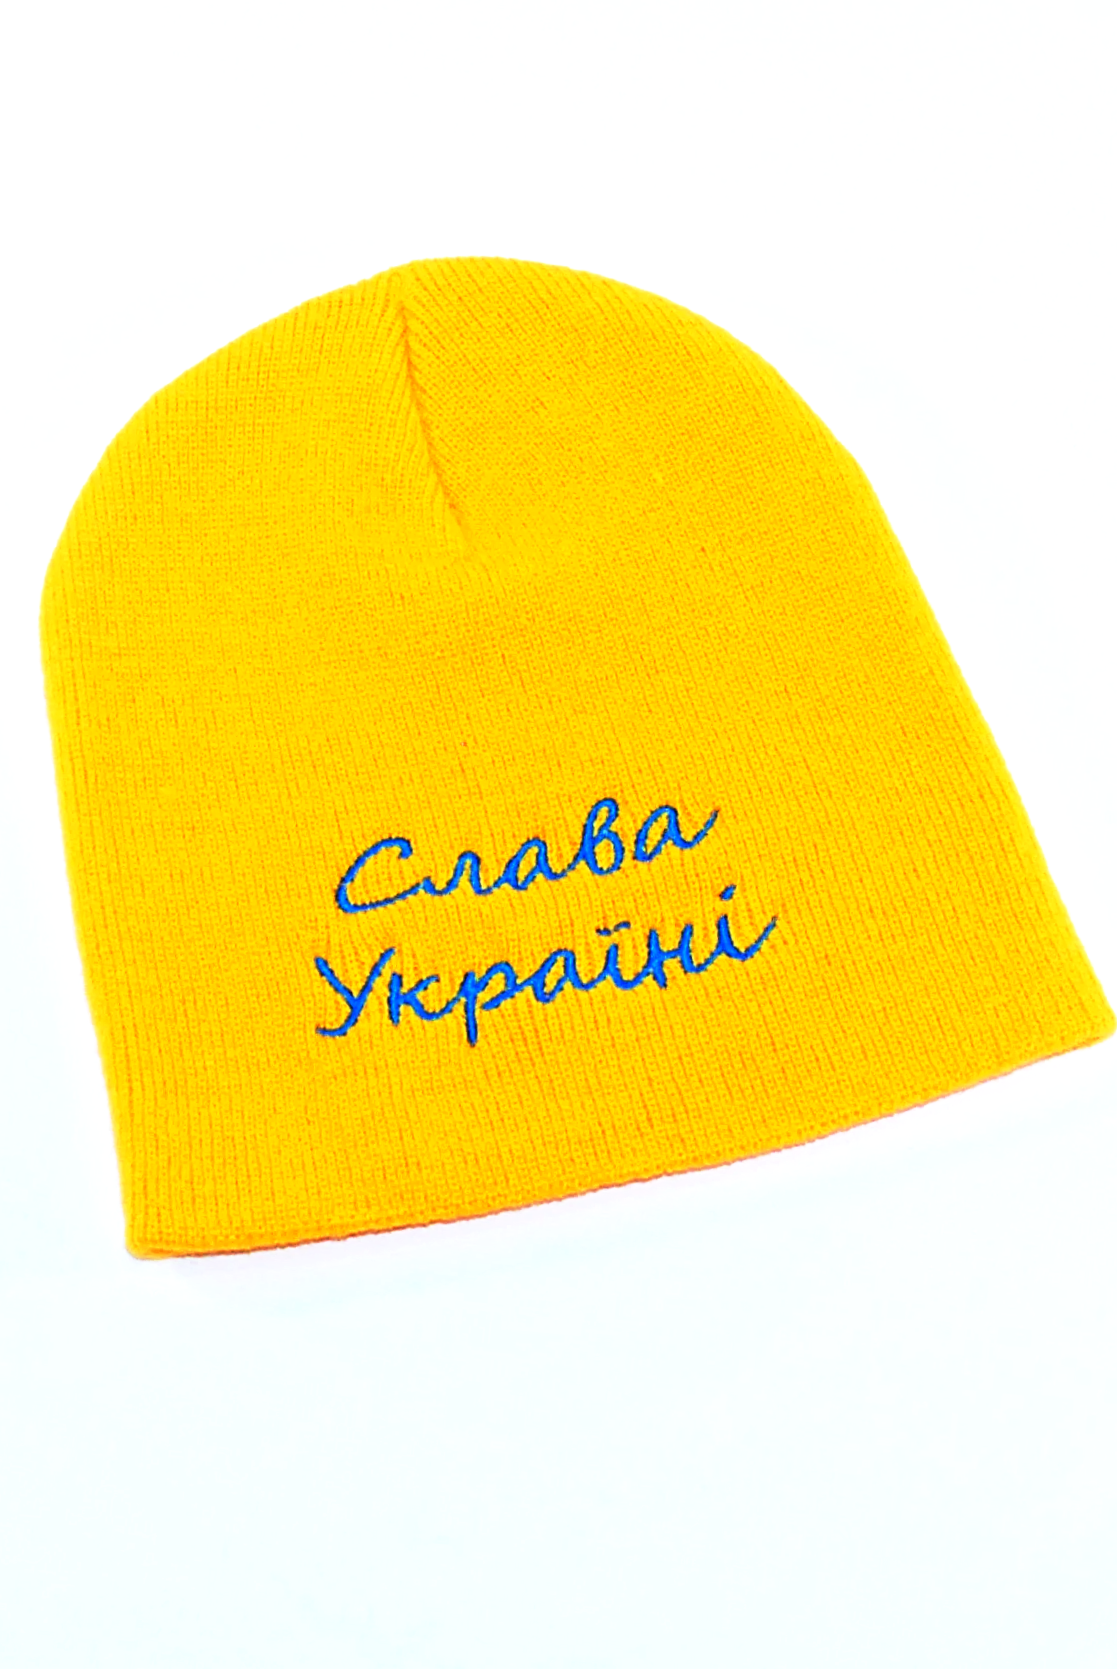 Knitted embroidered beanie hat "Слава Україні"